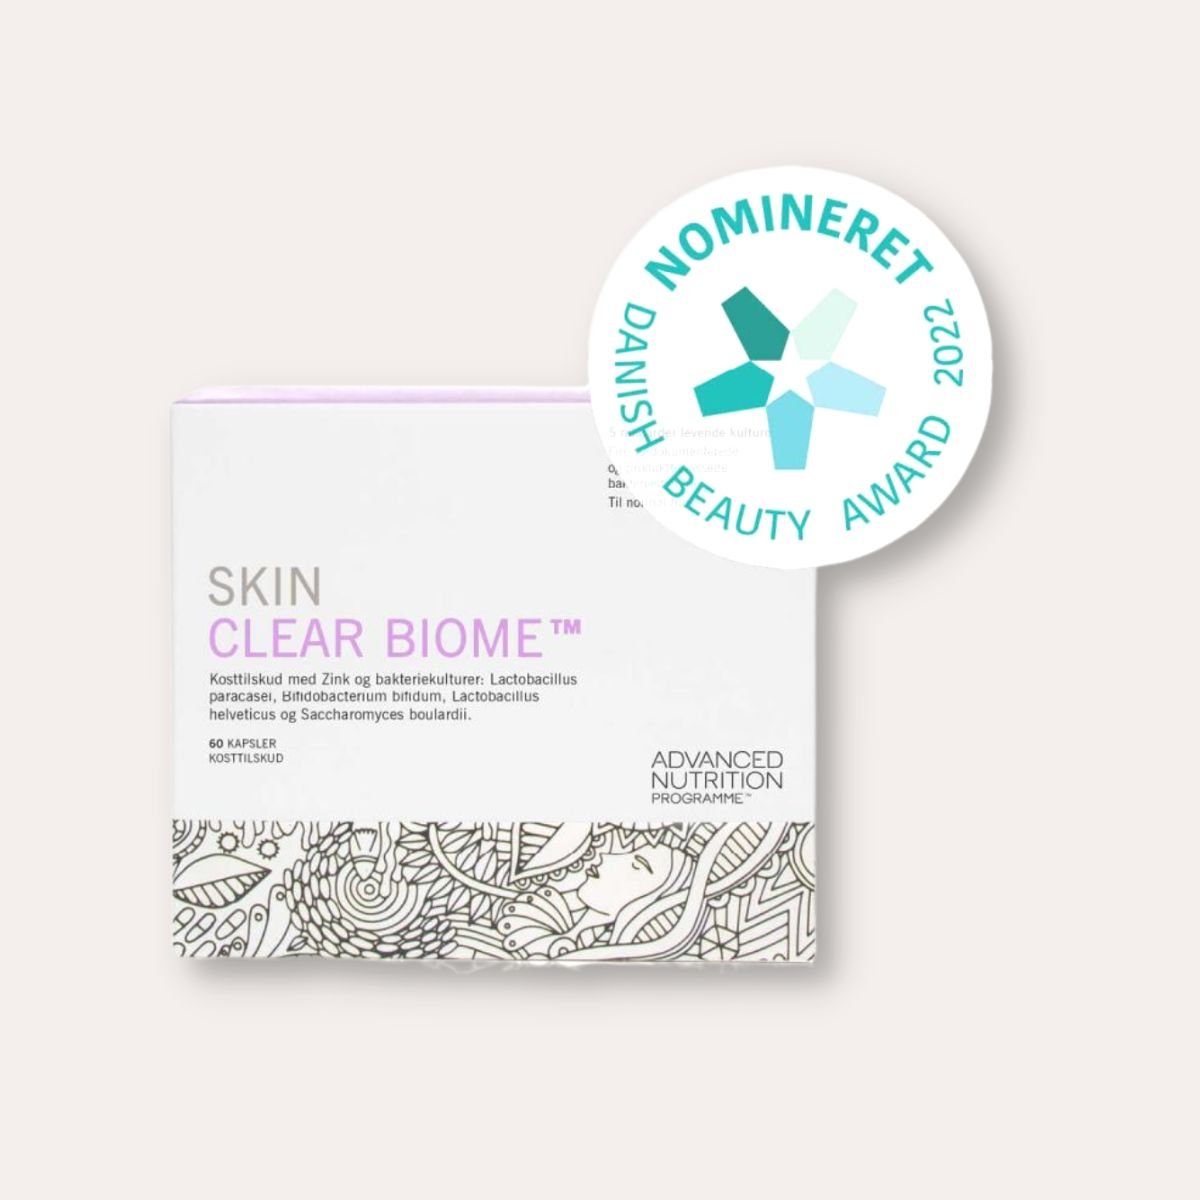 Skin Clear Biome - Sara Lorentsen Skin Expert